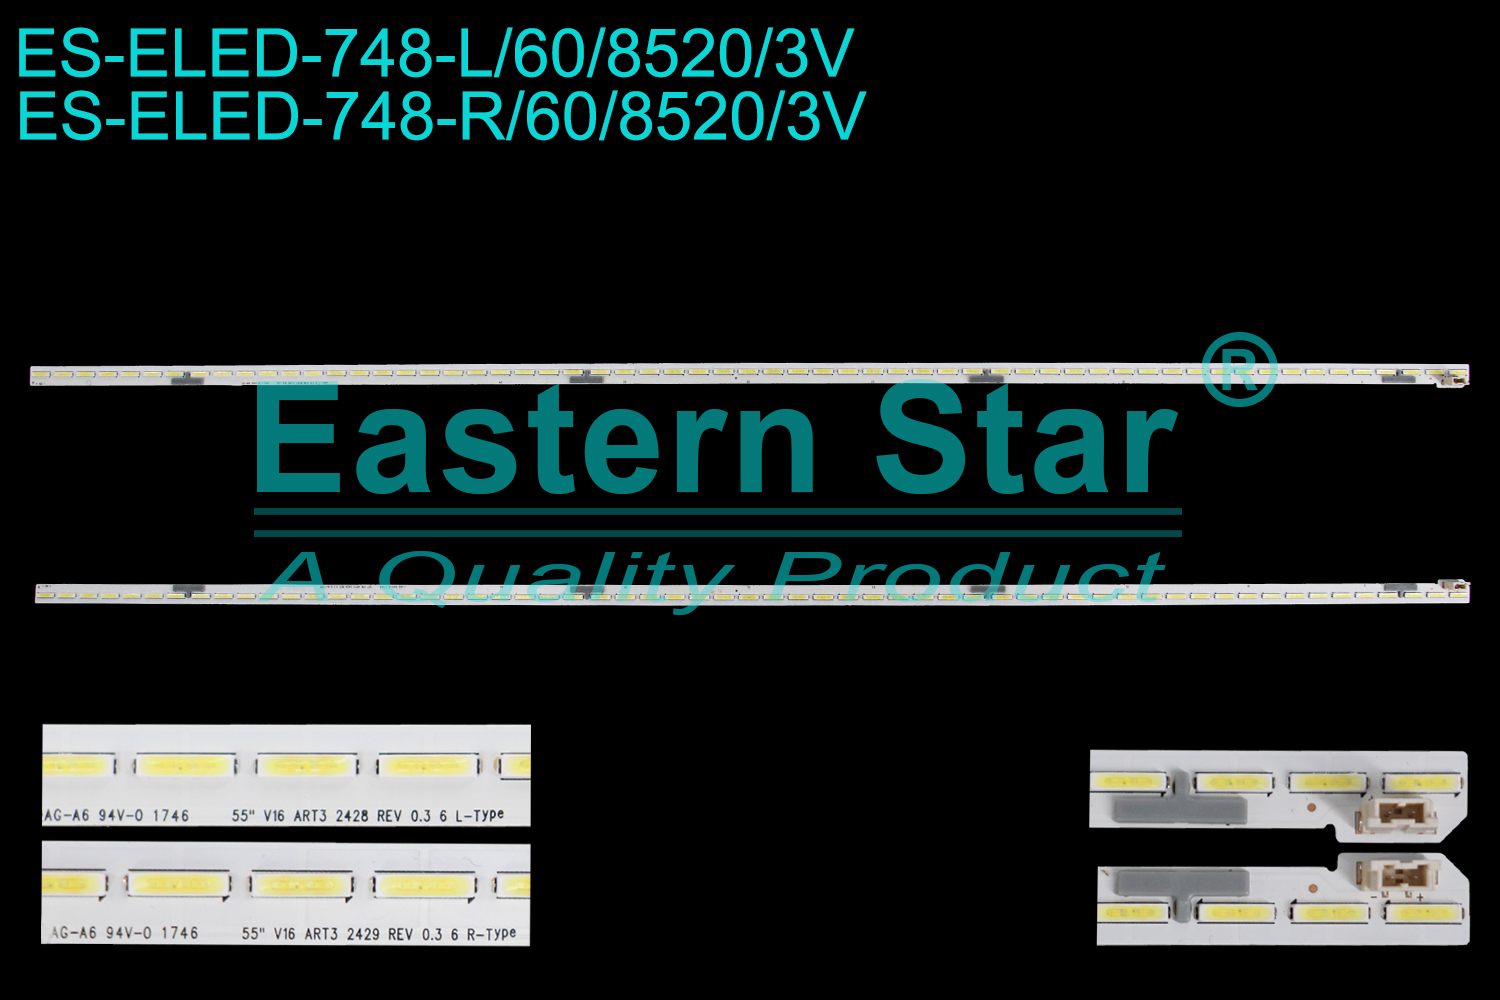 ES-ELED-748 ELED/EDGE TV backlight use for 55'' Lg 55LW340C-UA 55LV340C-UB 55SJ8000-UA  55" V16 ART3 2428 REV 0.3 6 L-TYPE  55" V16 ART3 2429 REV 0.3 6 R-TYPE   6916L2428A  6916L2429A LED STRIPS(2)